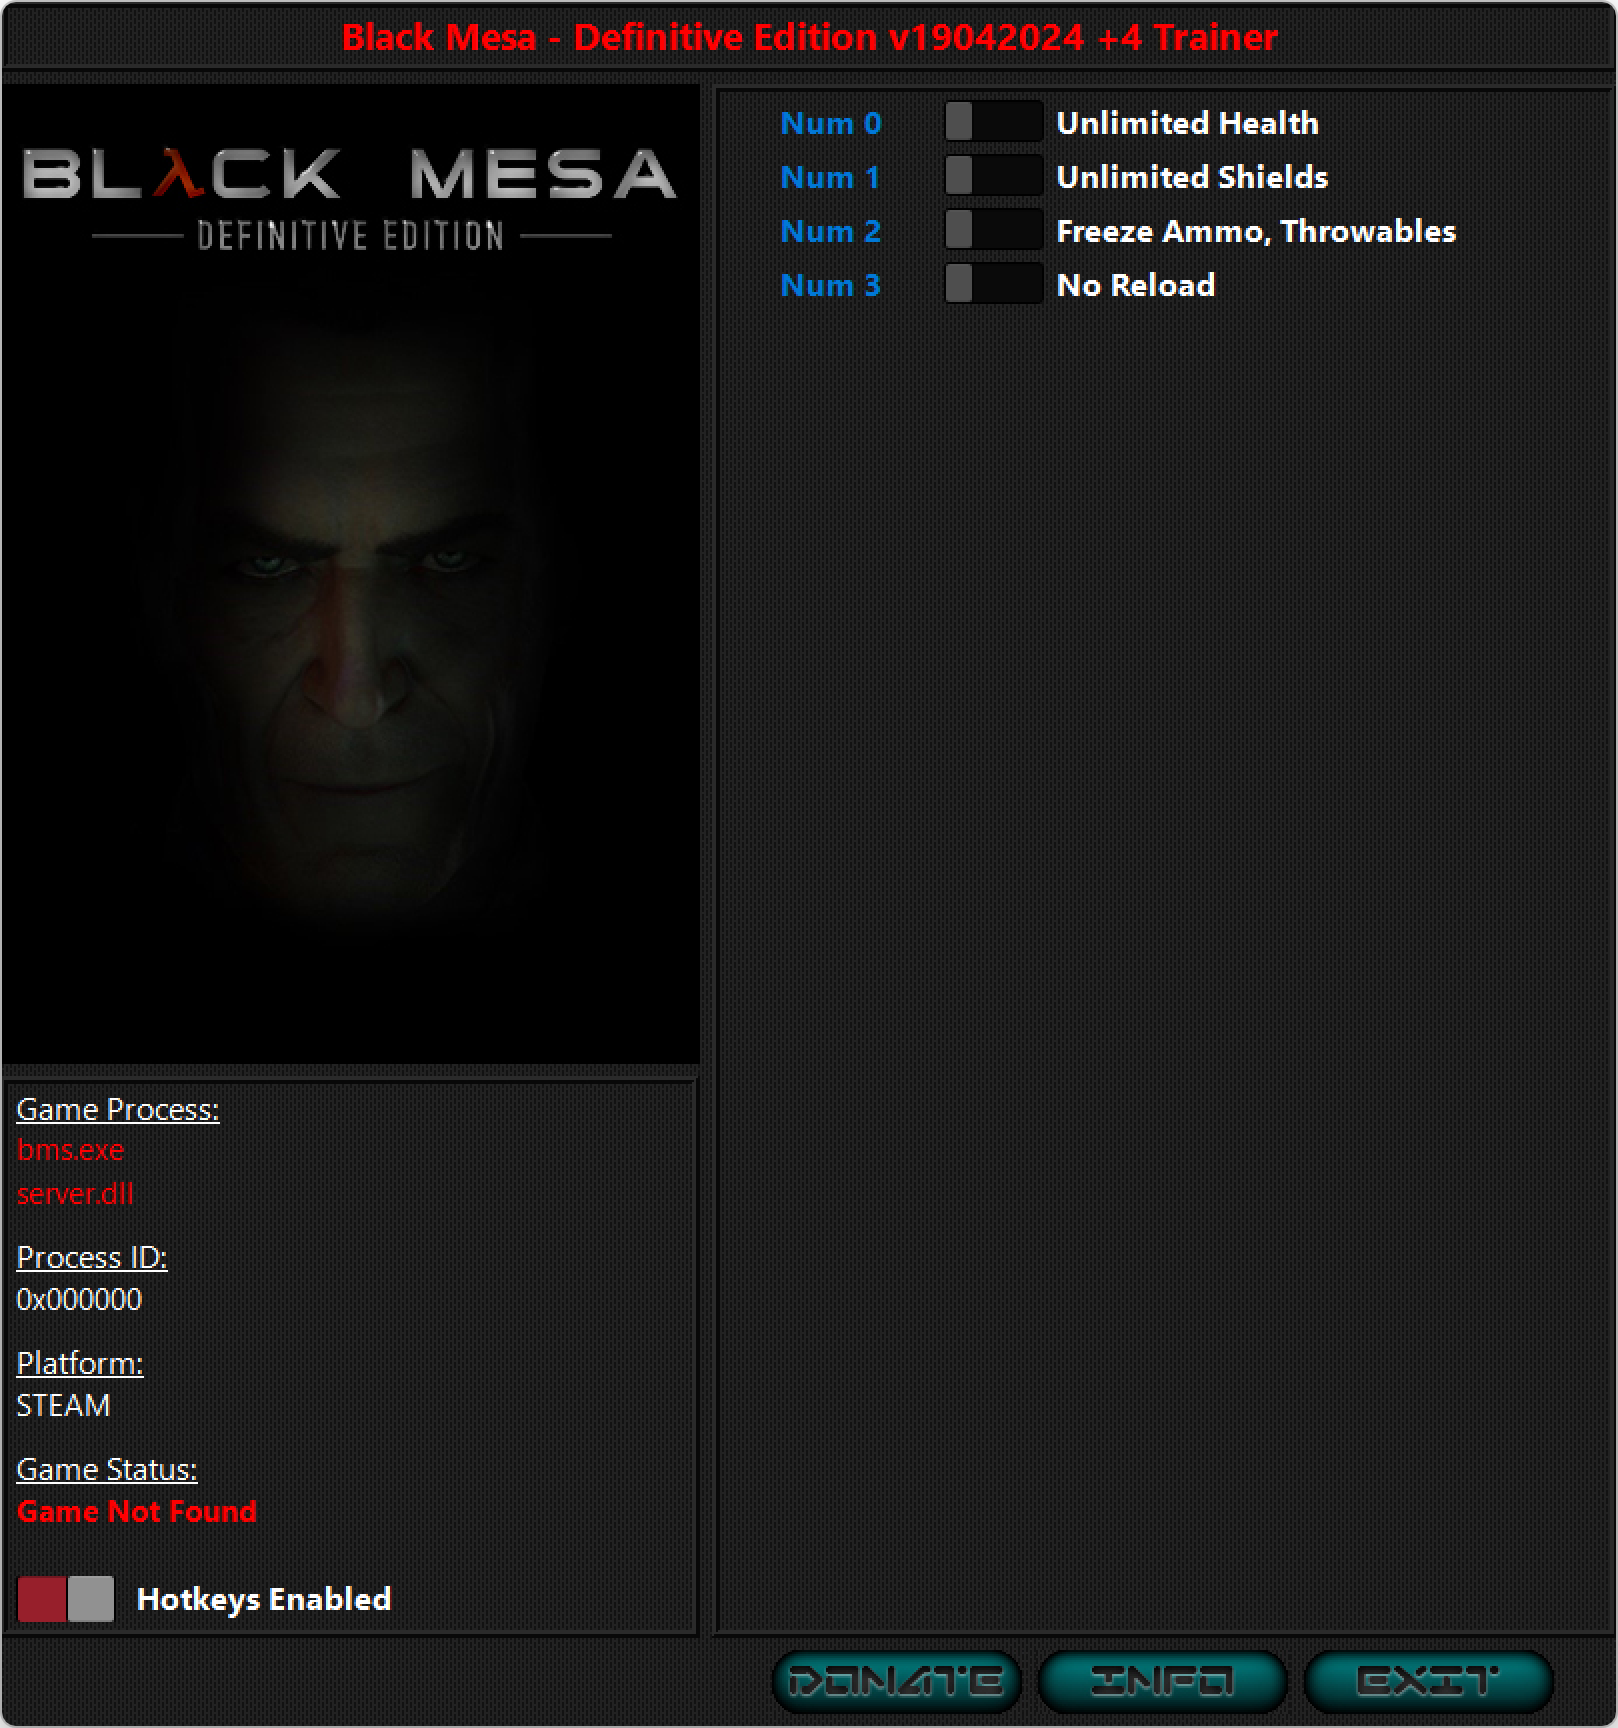 Black Mesa: Definitive Edition v19042024 Trainer +4